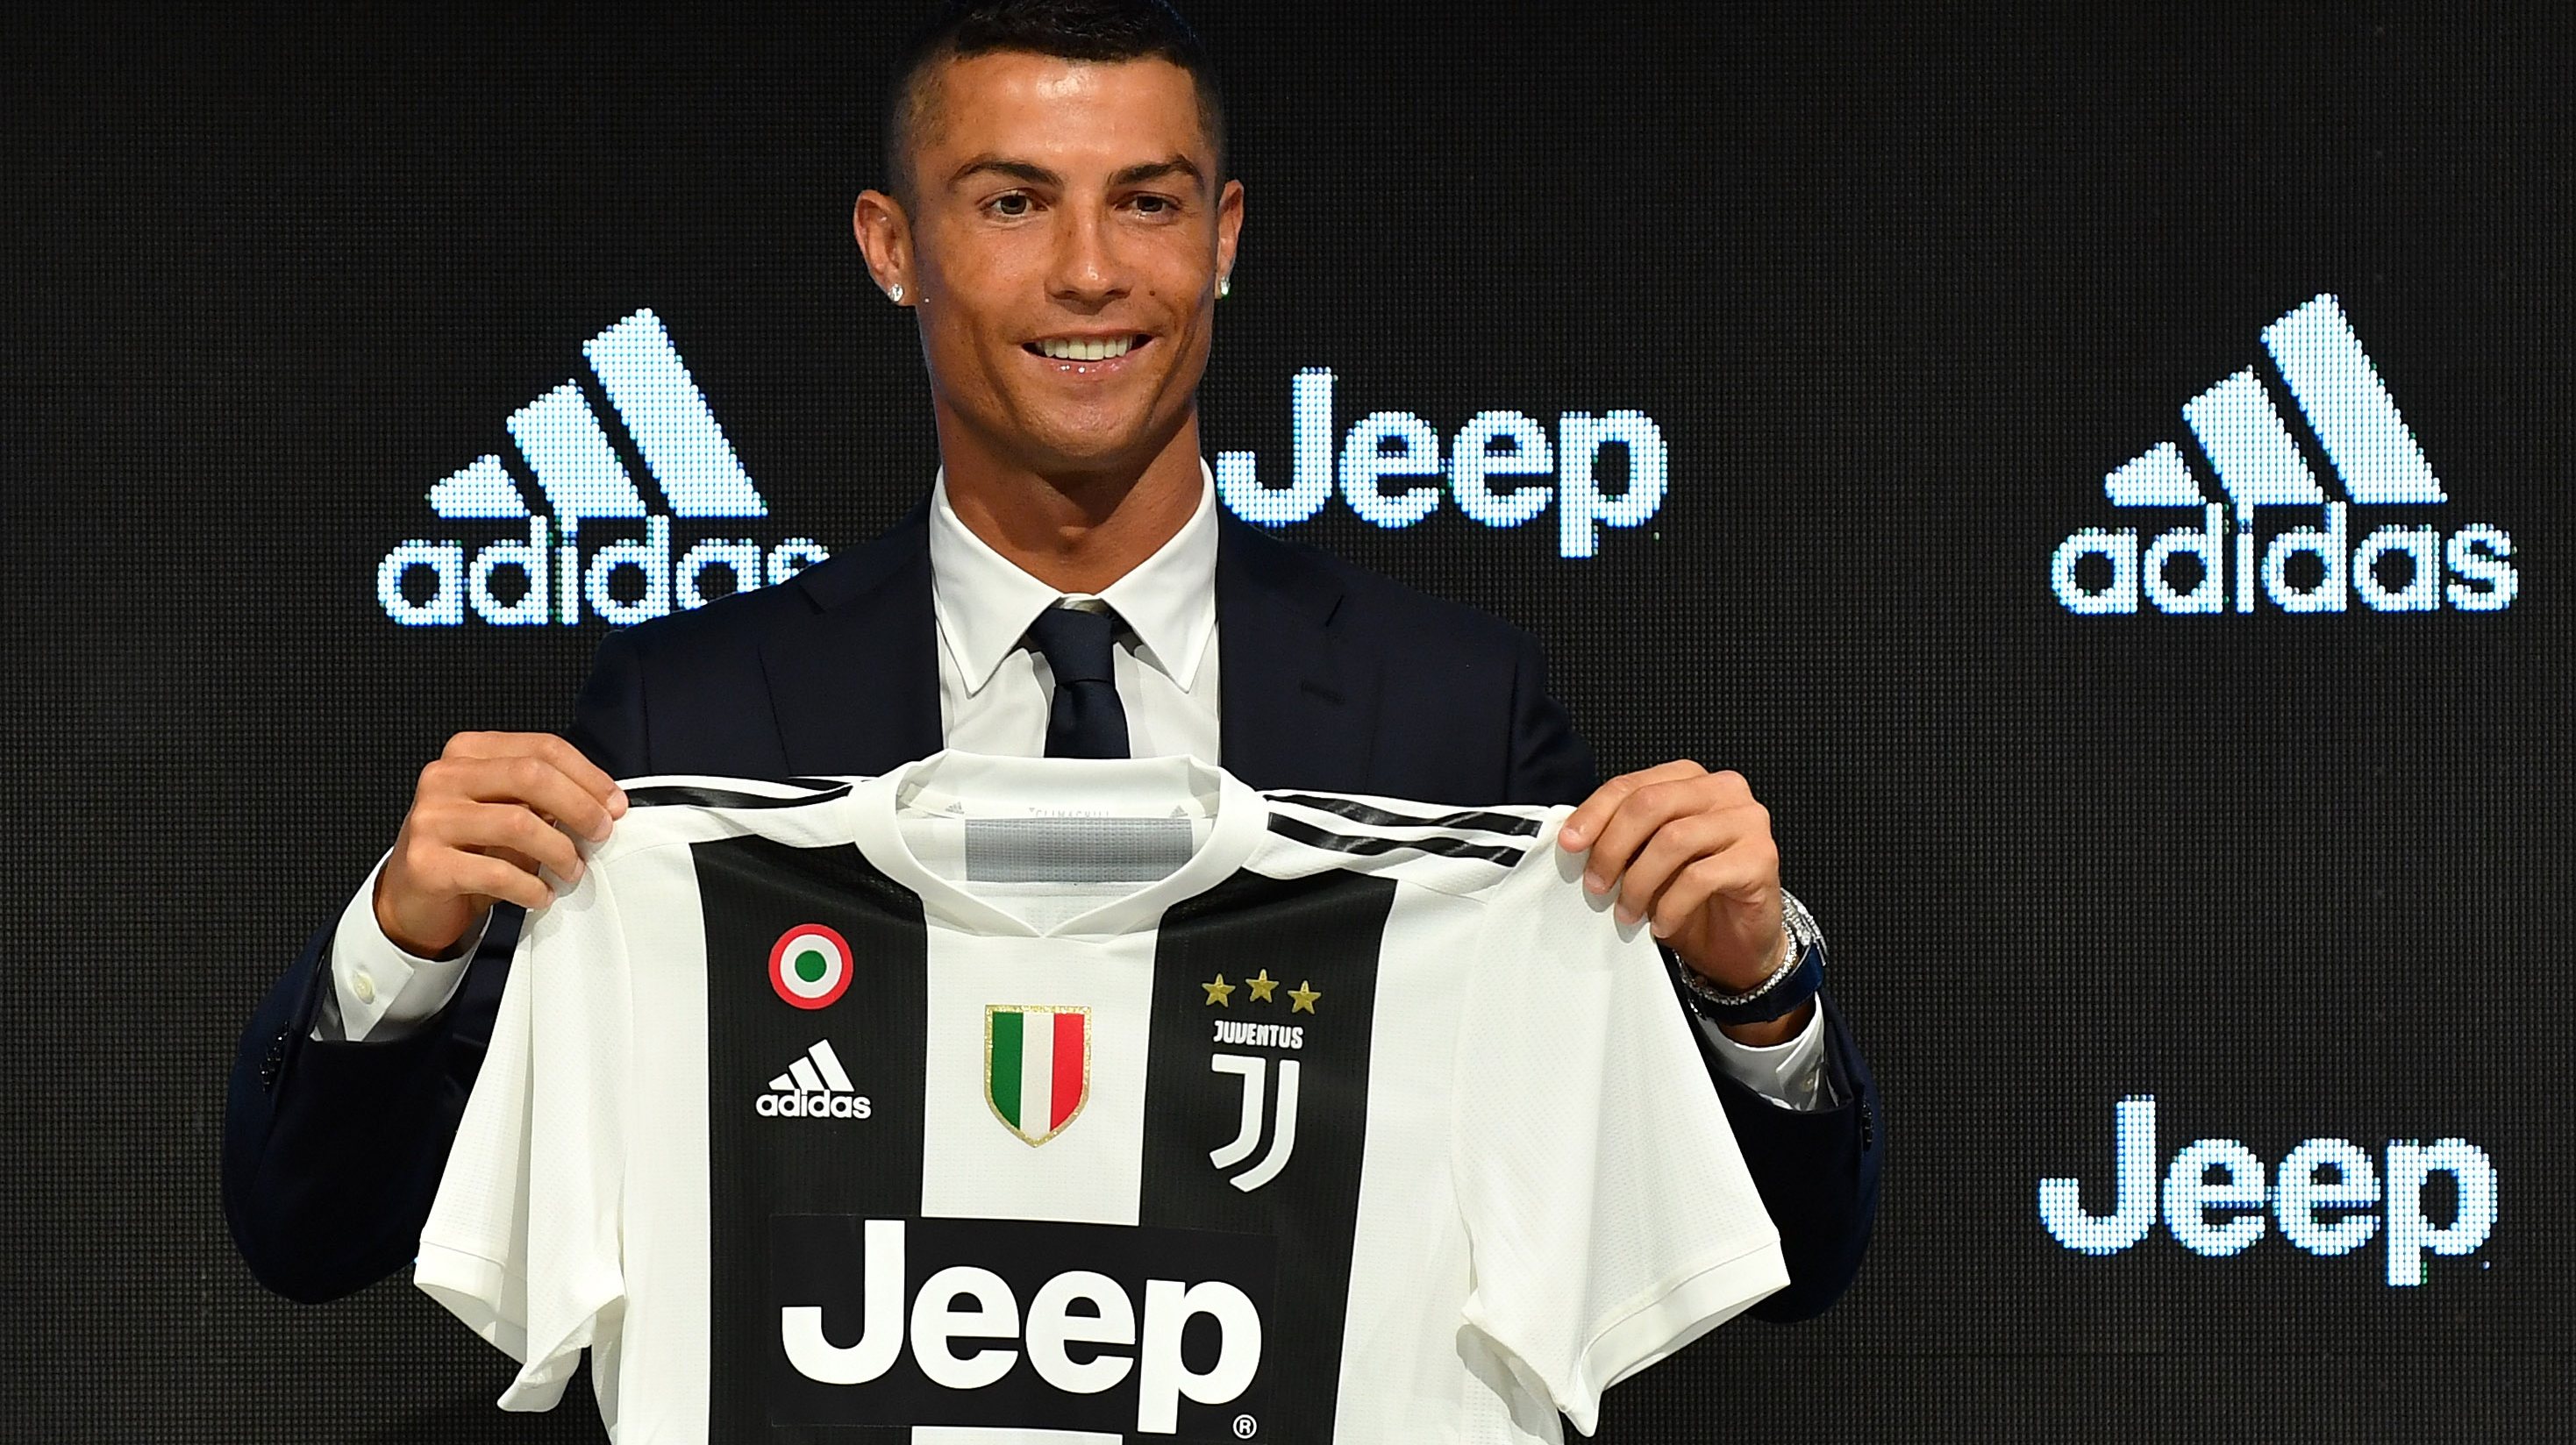 Juventus - Cristiano Ronaldo Day